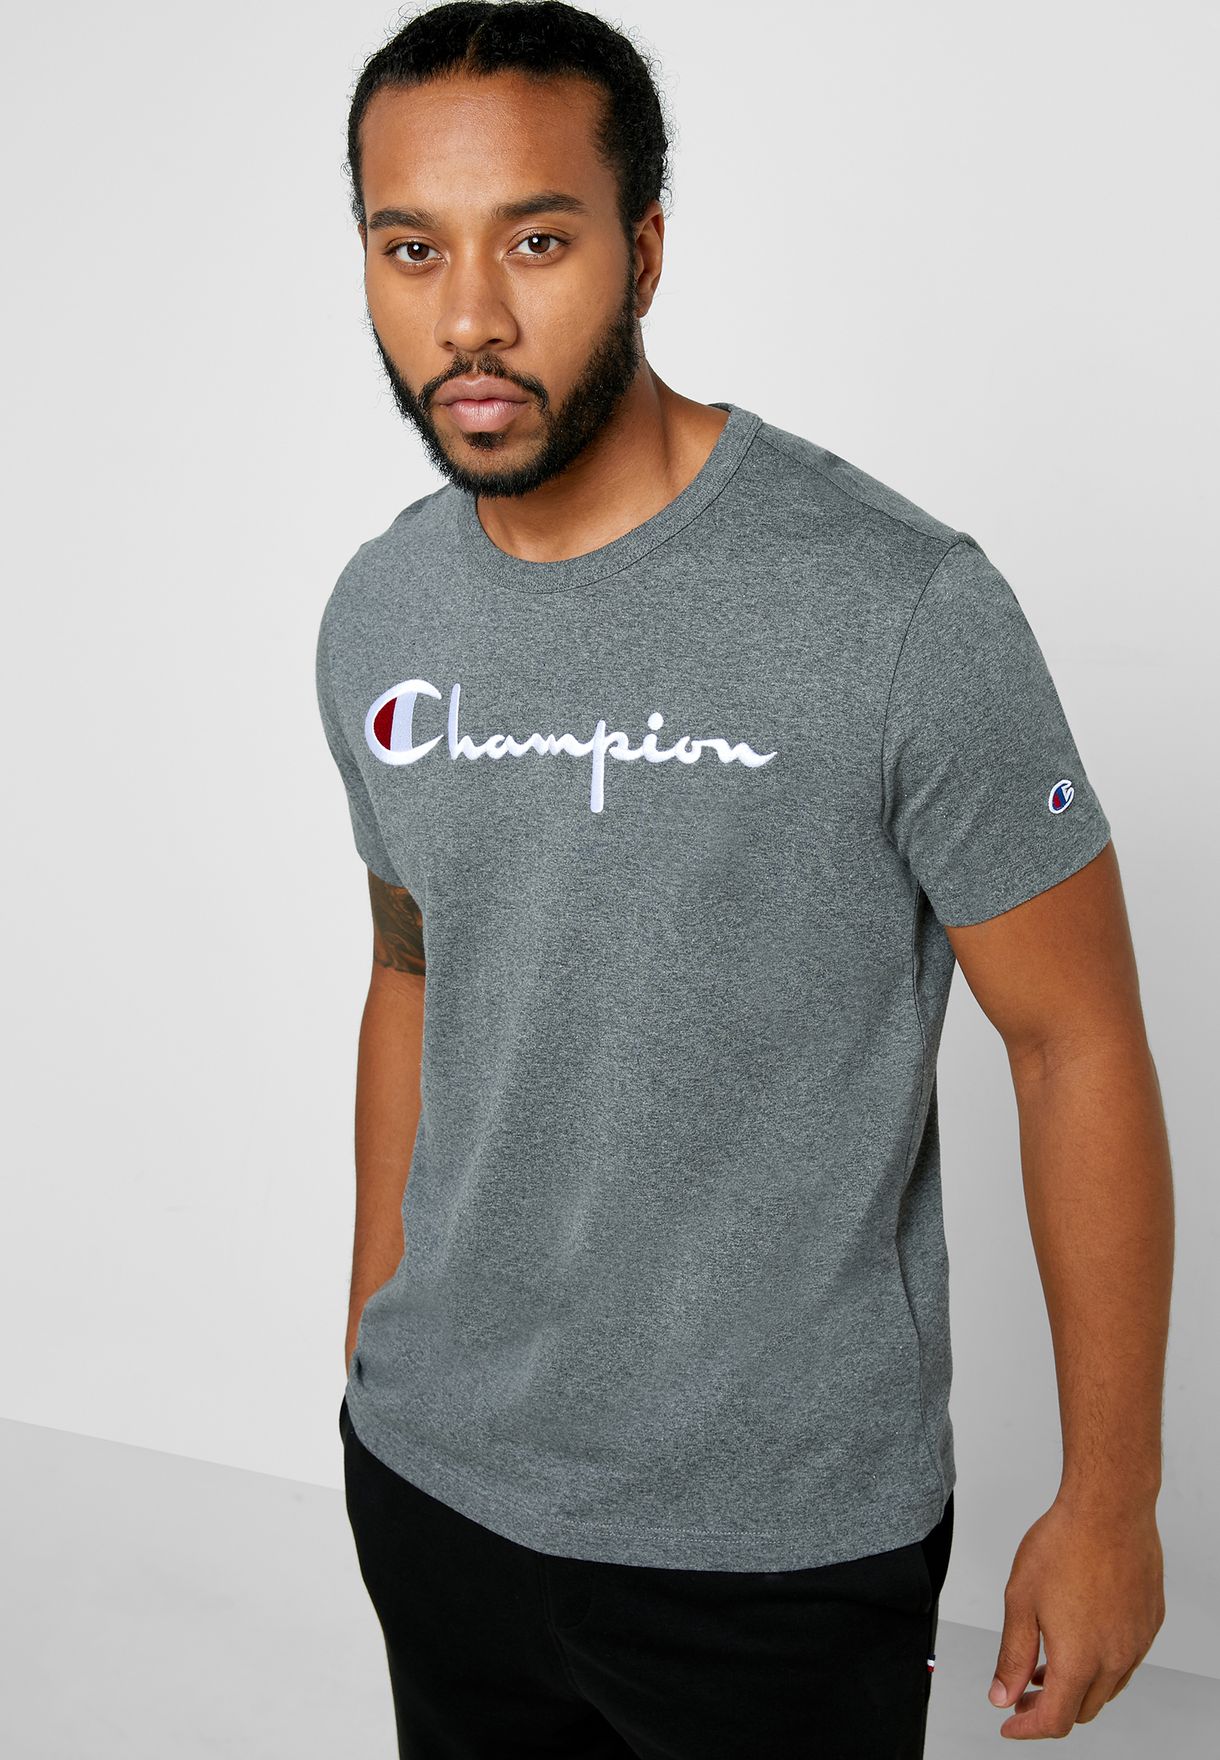 buy champion t shirt